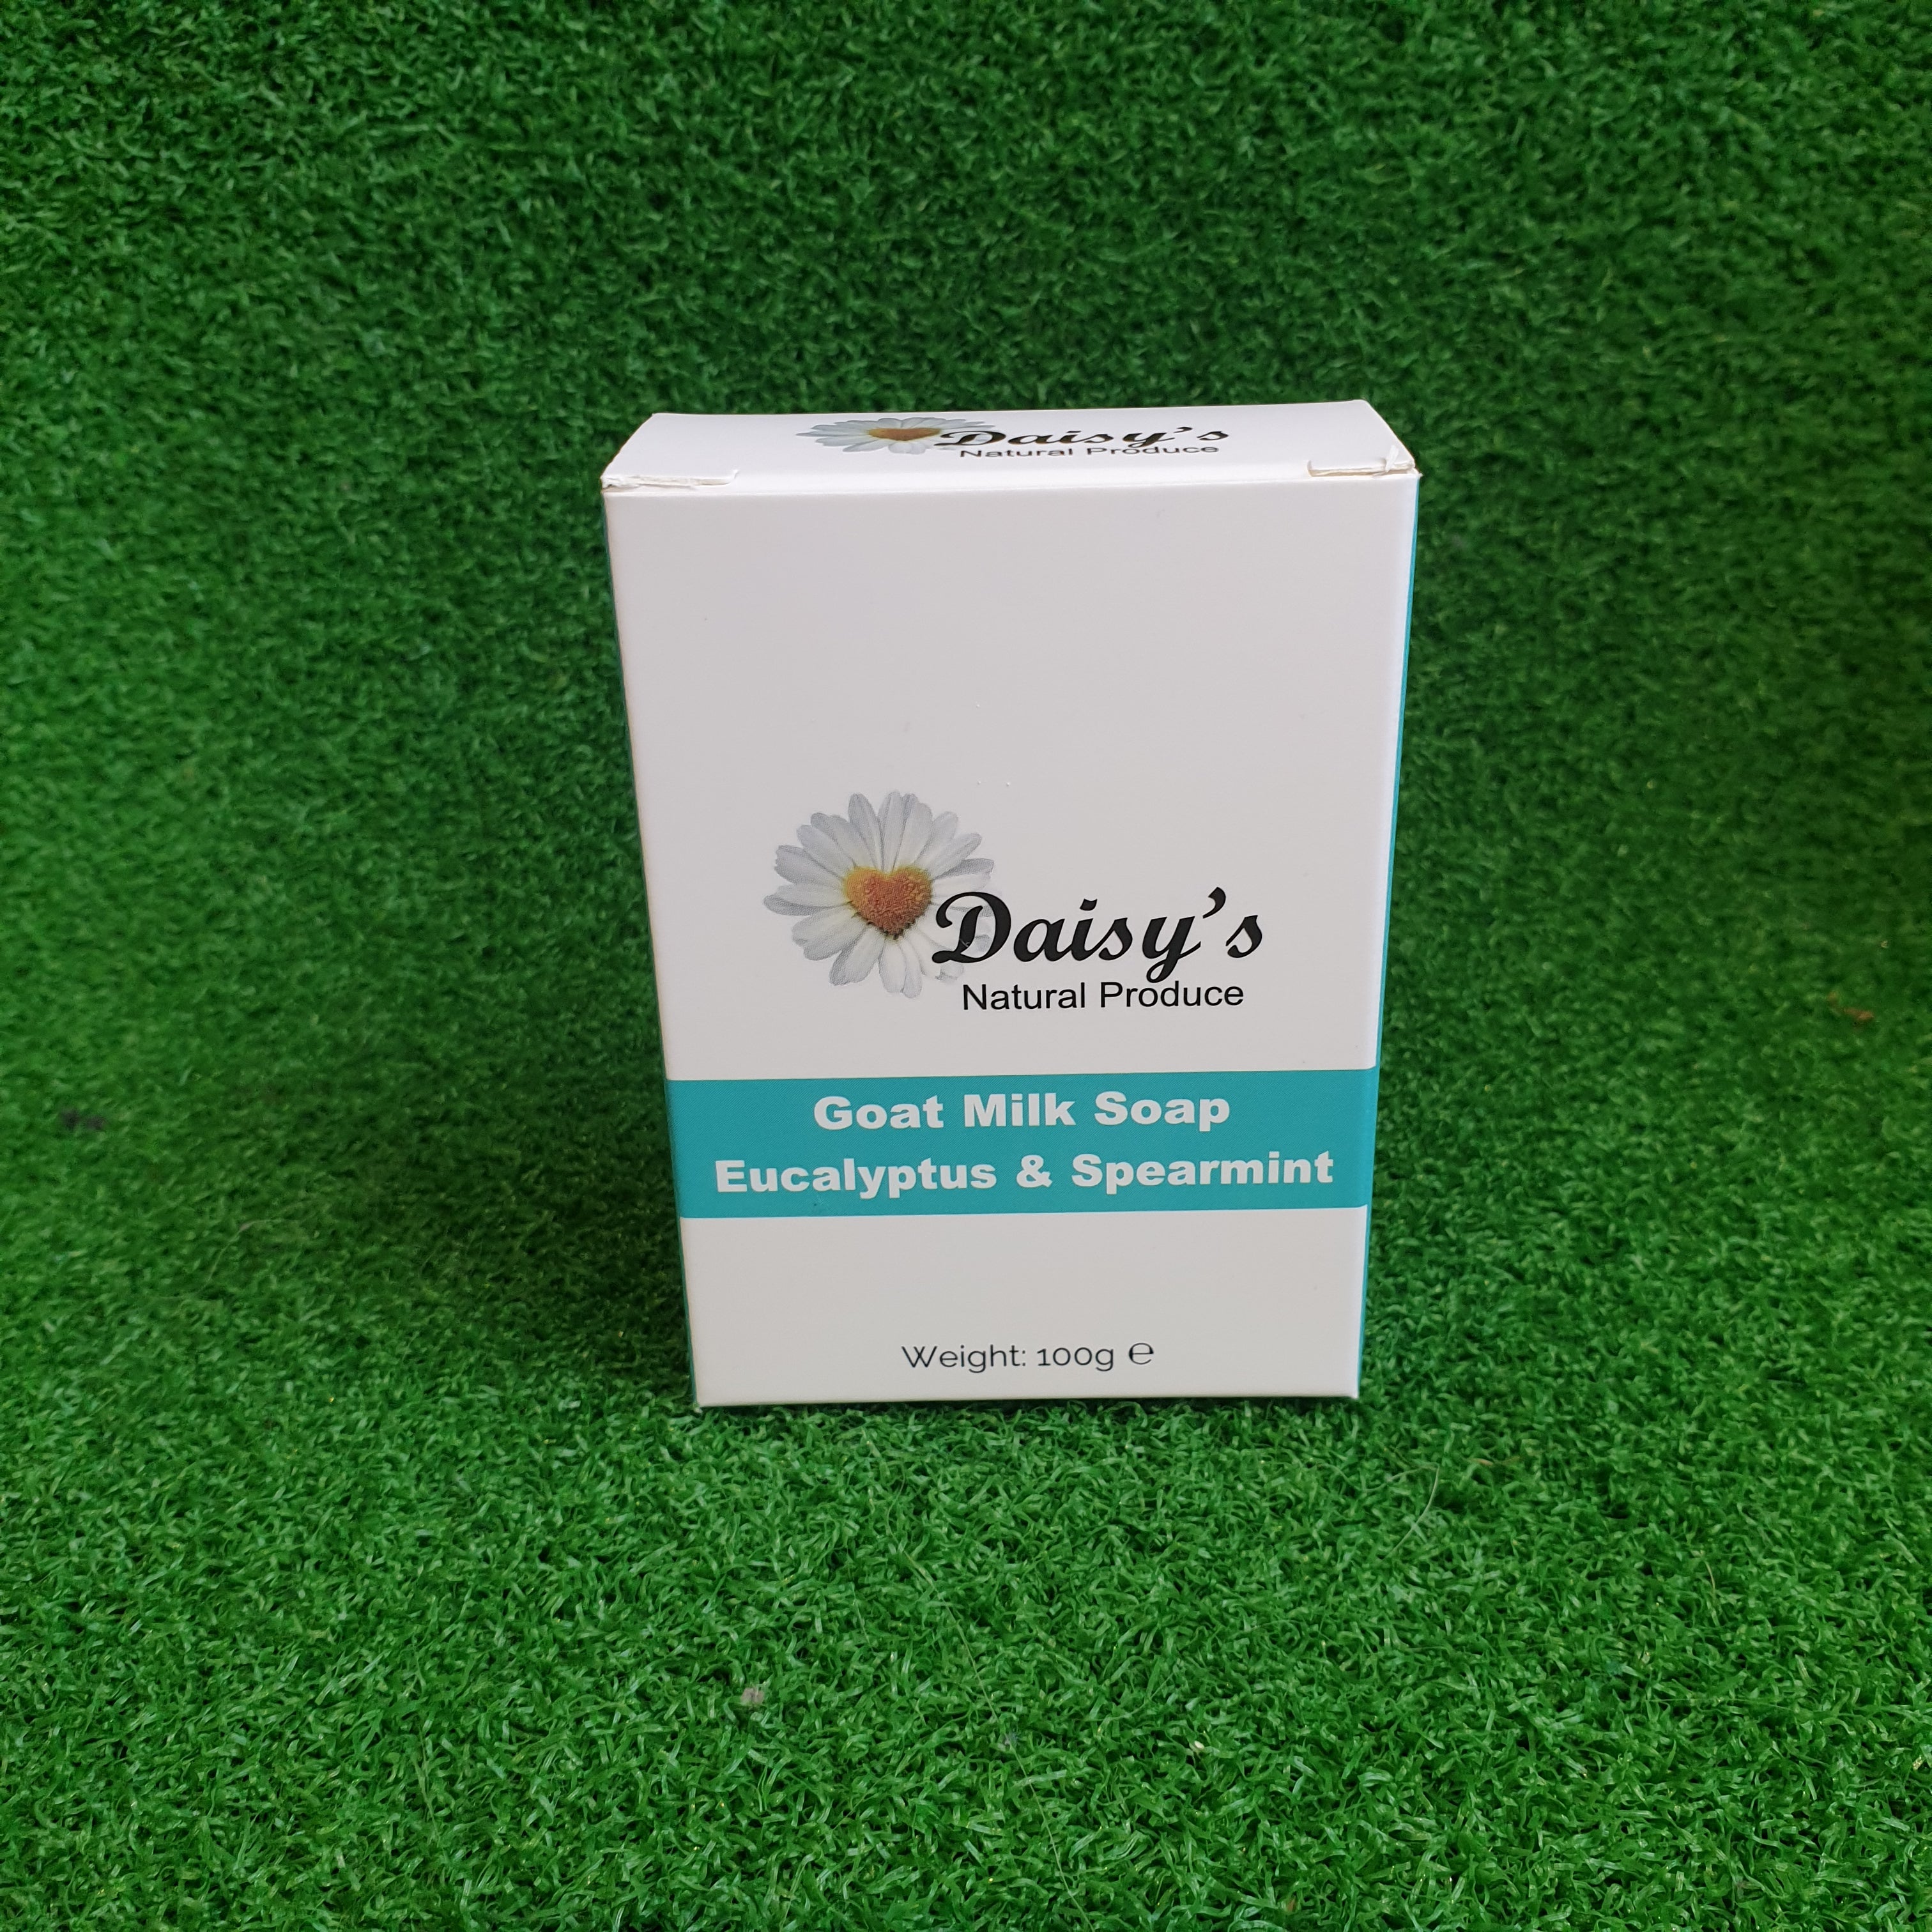 Eucalyptus Mint Goat Milk Soap – Eden Body Care